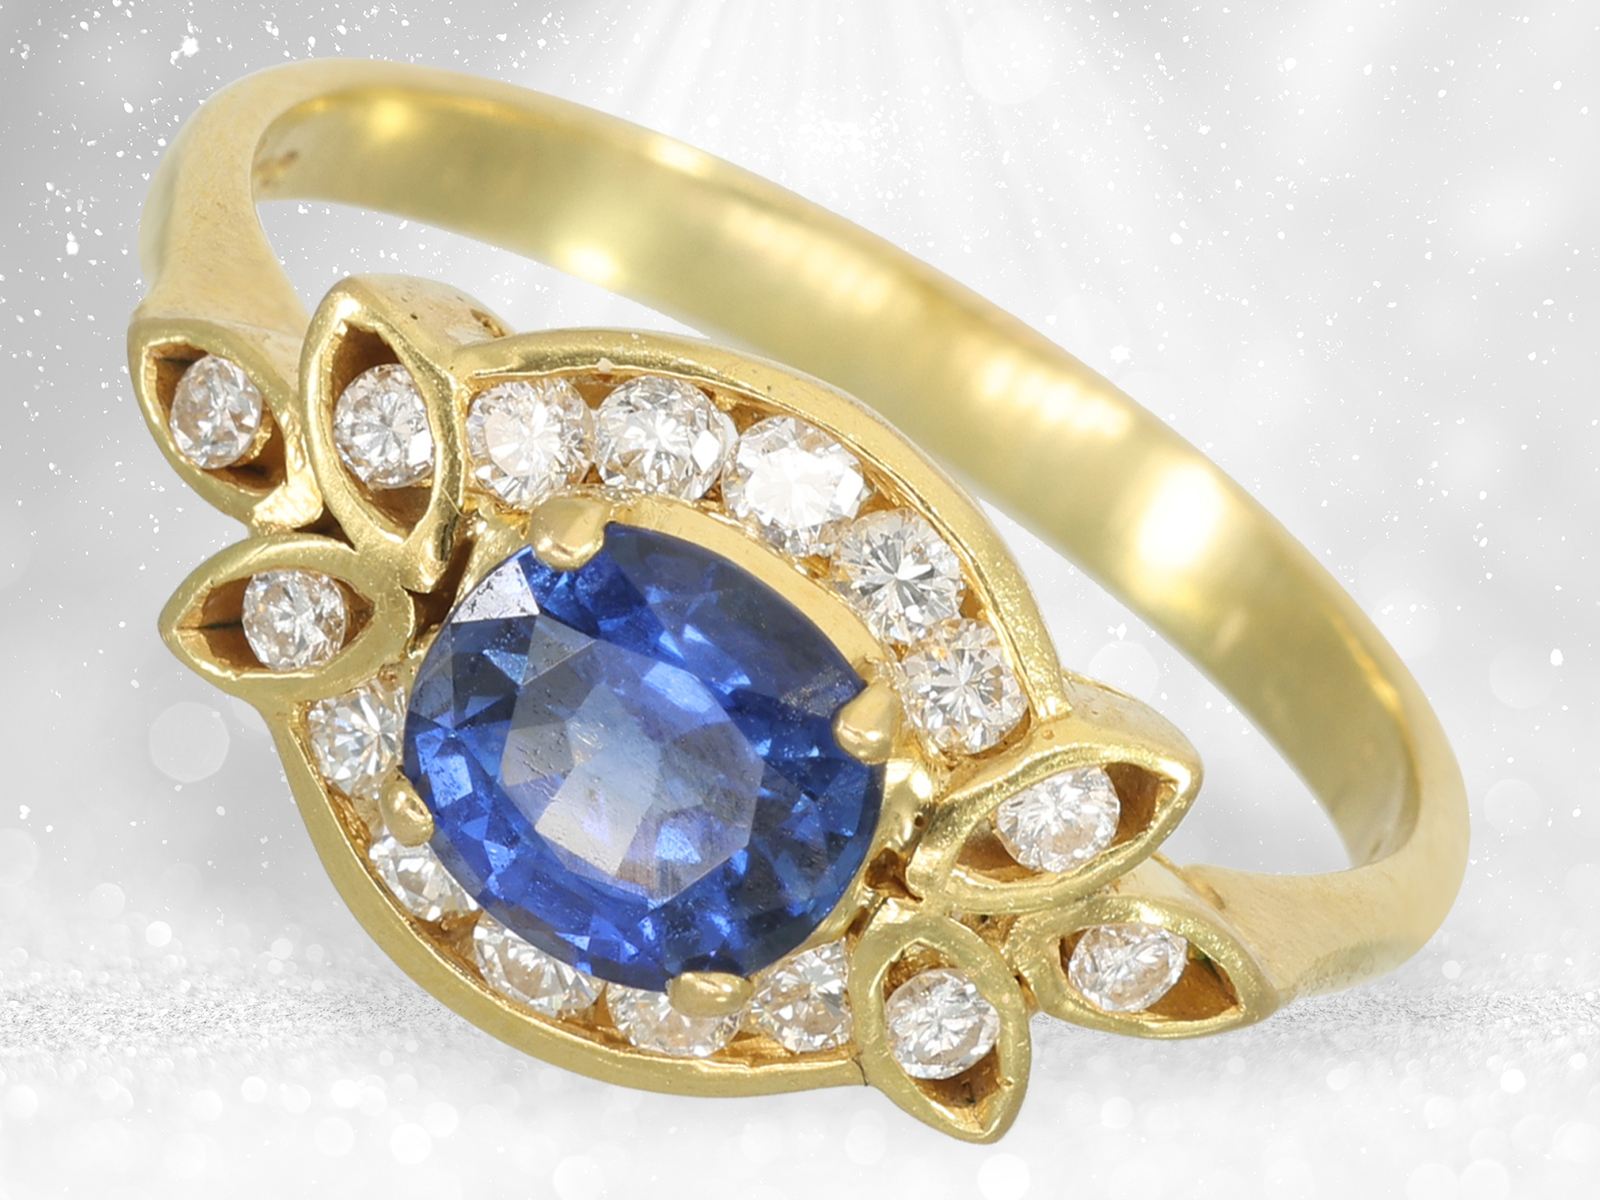 Filigree sapphire/brilliant-cut diamond goldsmith's bracelet with matching ring, 18K gold - Image 4 of 4